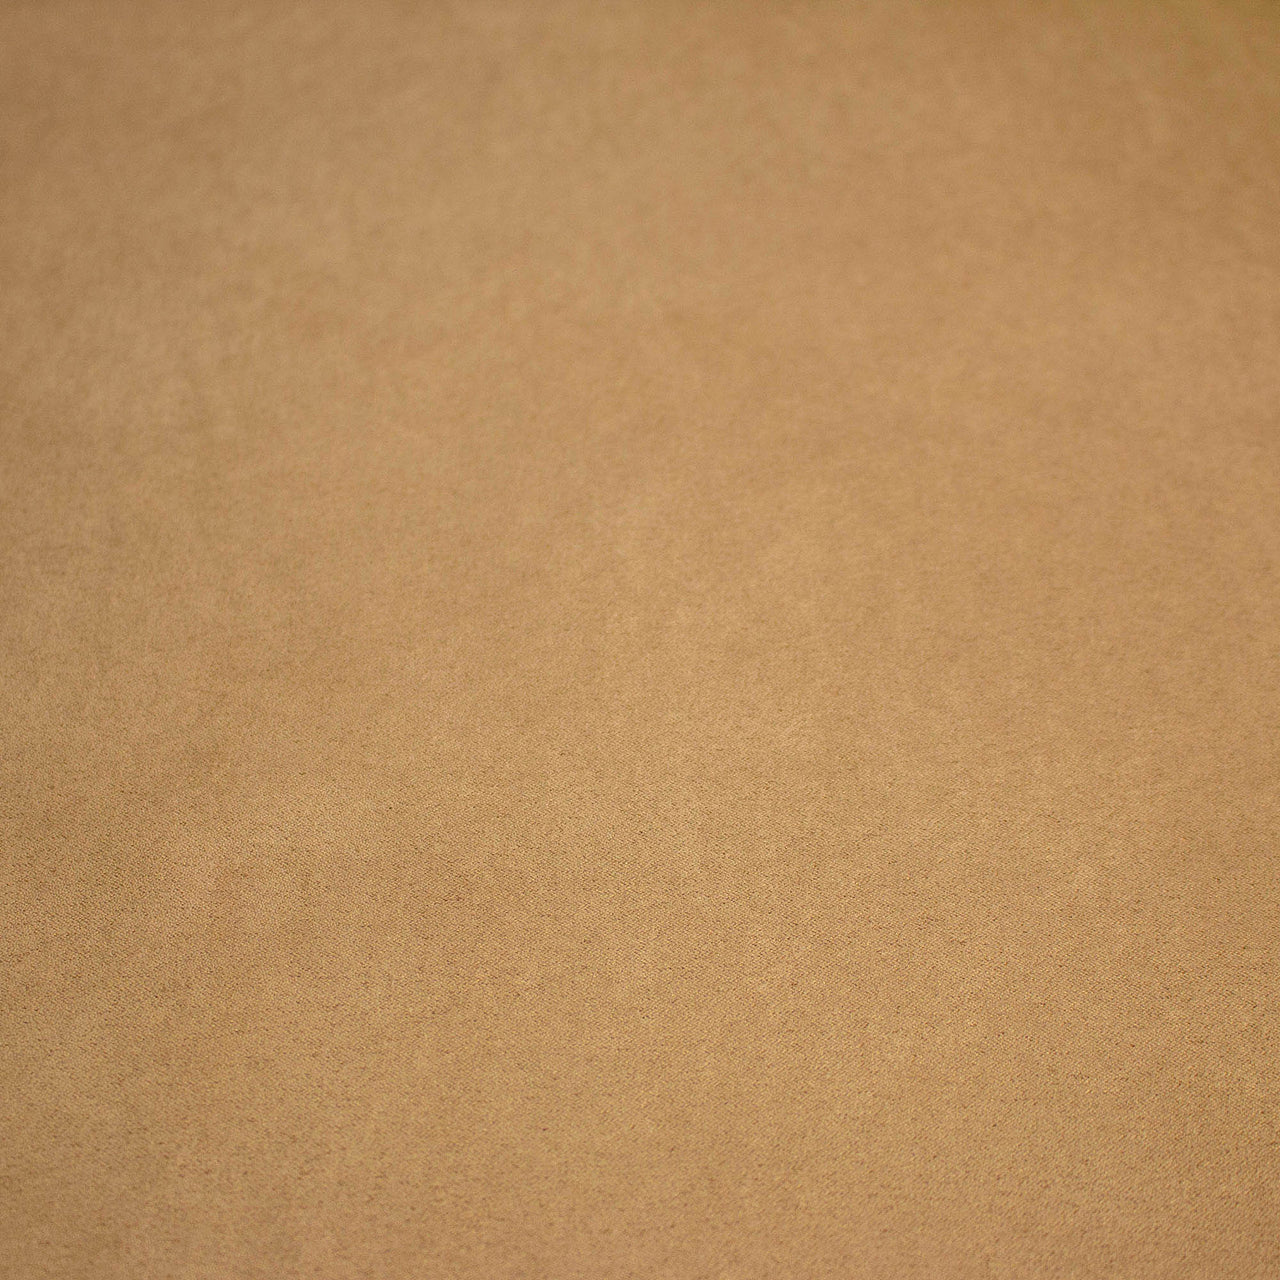 Tissu imitation daim beige - Qualité supérieure - 100 % polyester